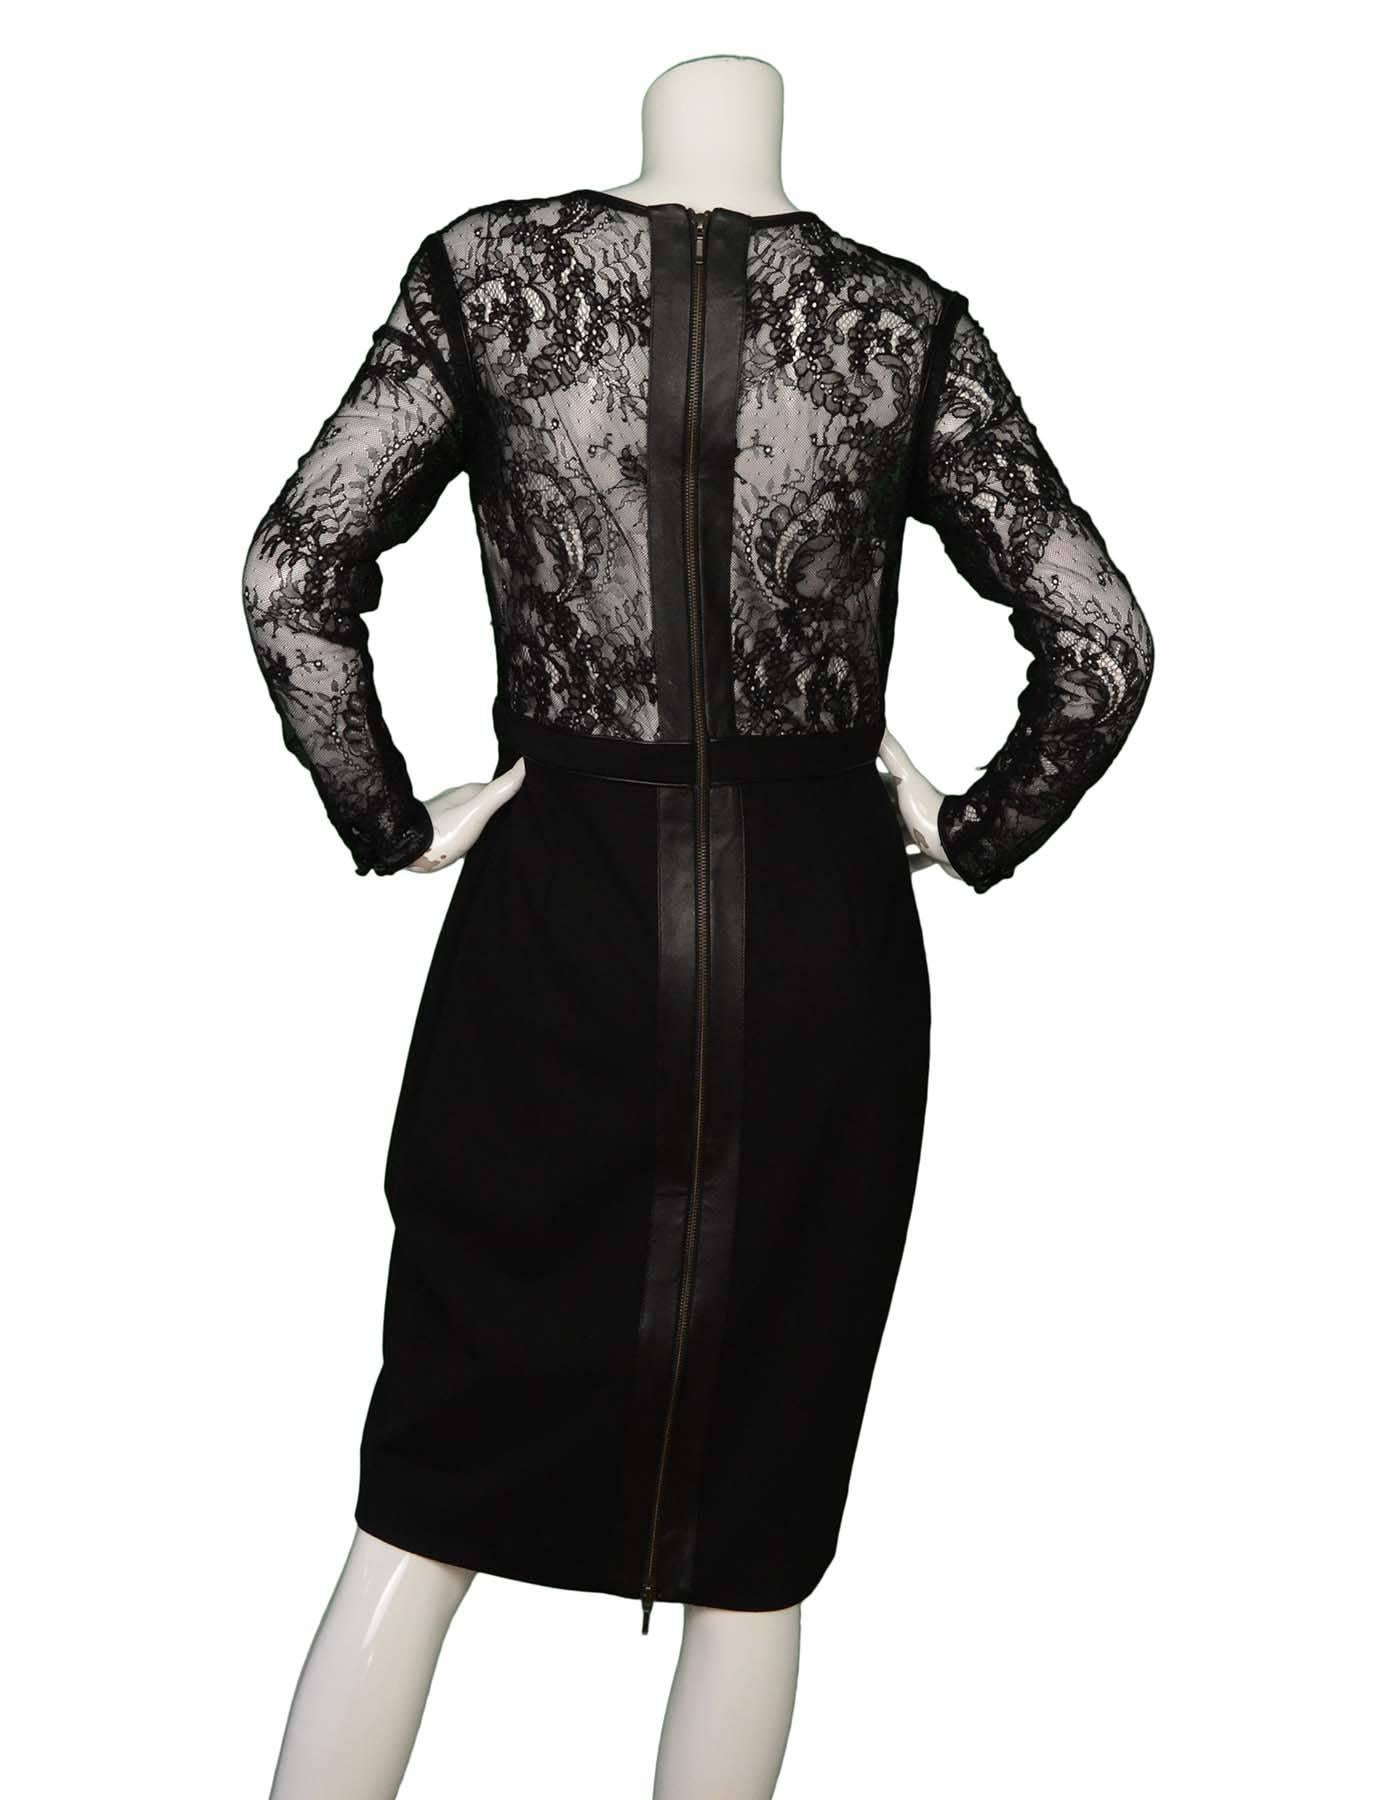 Black Catherine Deane Lace & Silk Vinita Long Sleeve Dress sz 10 rt. $935